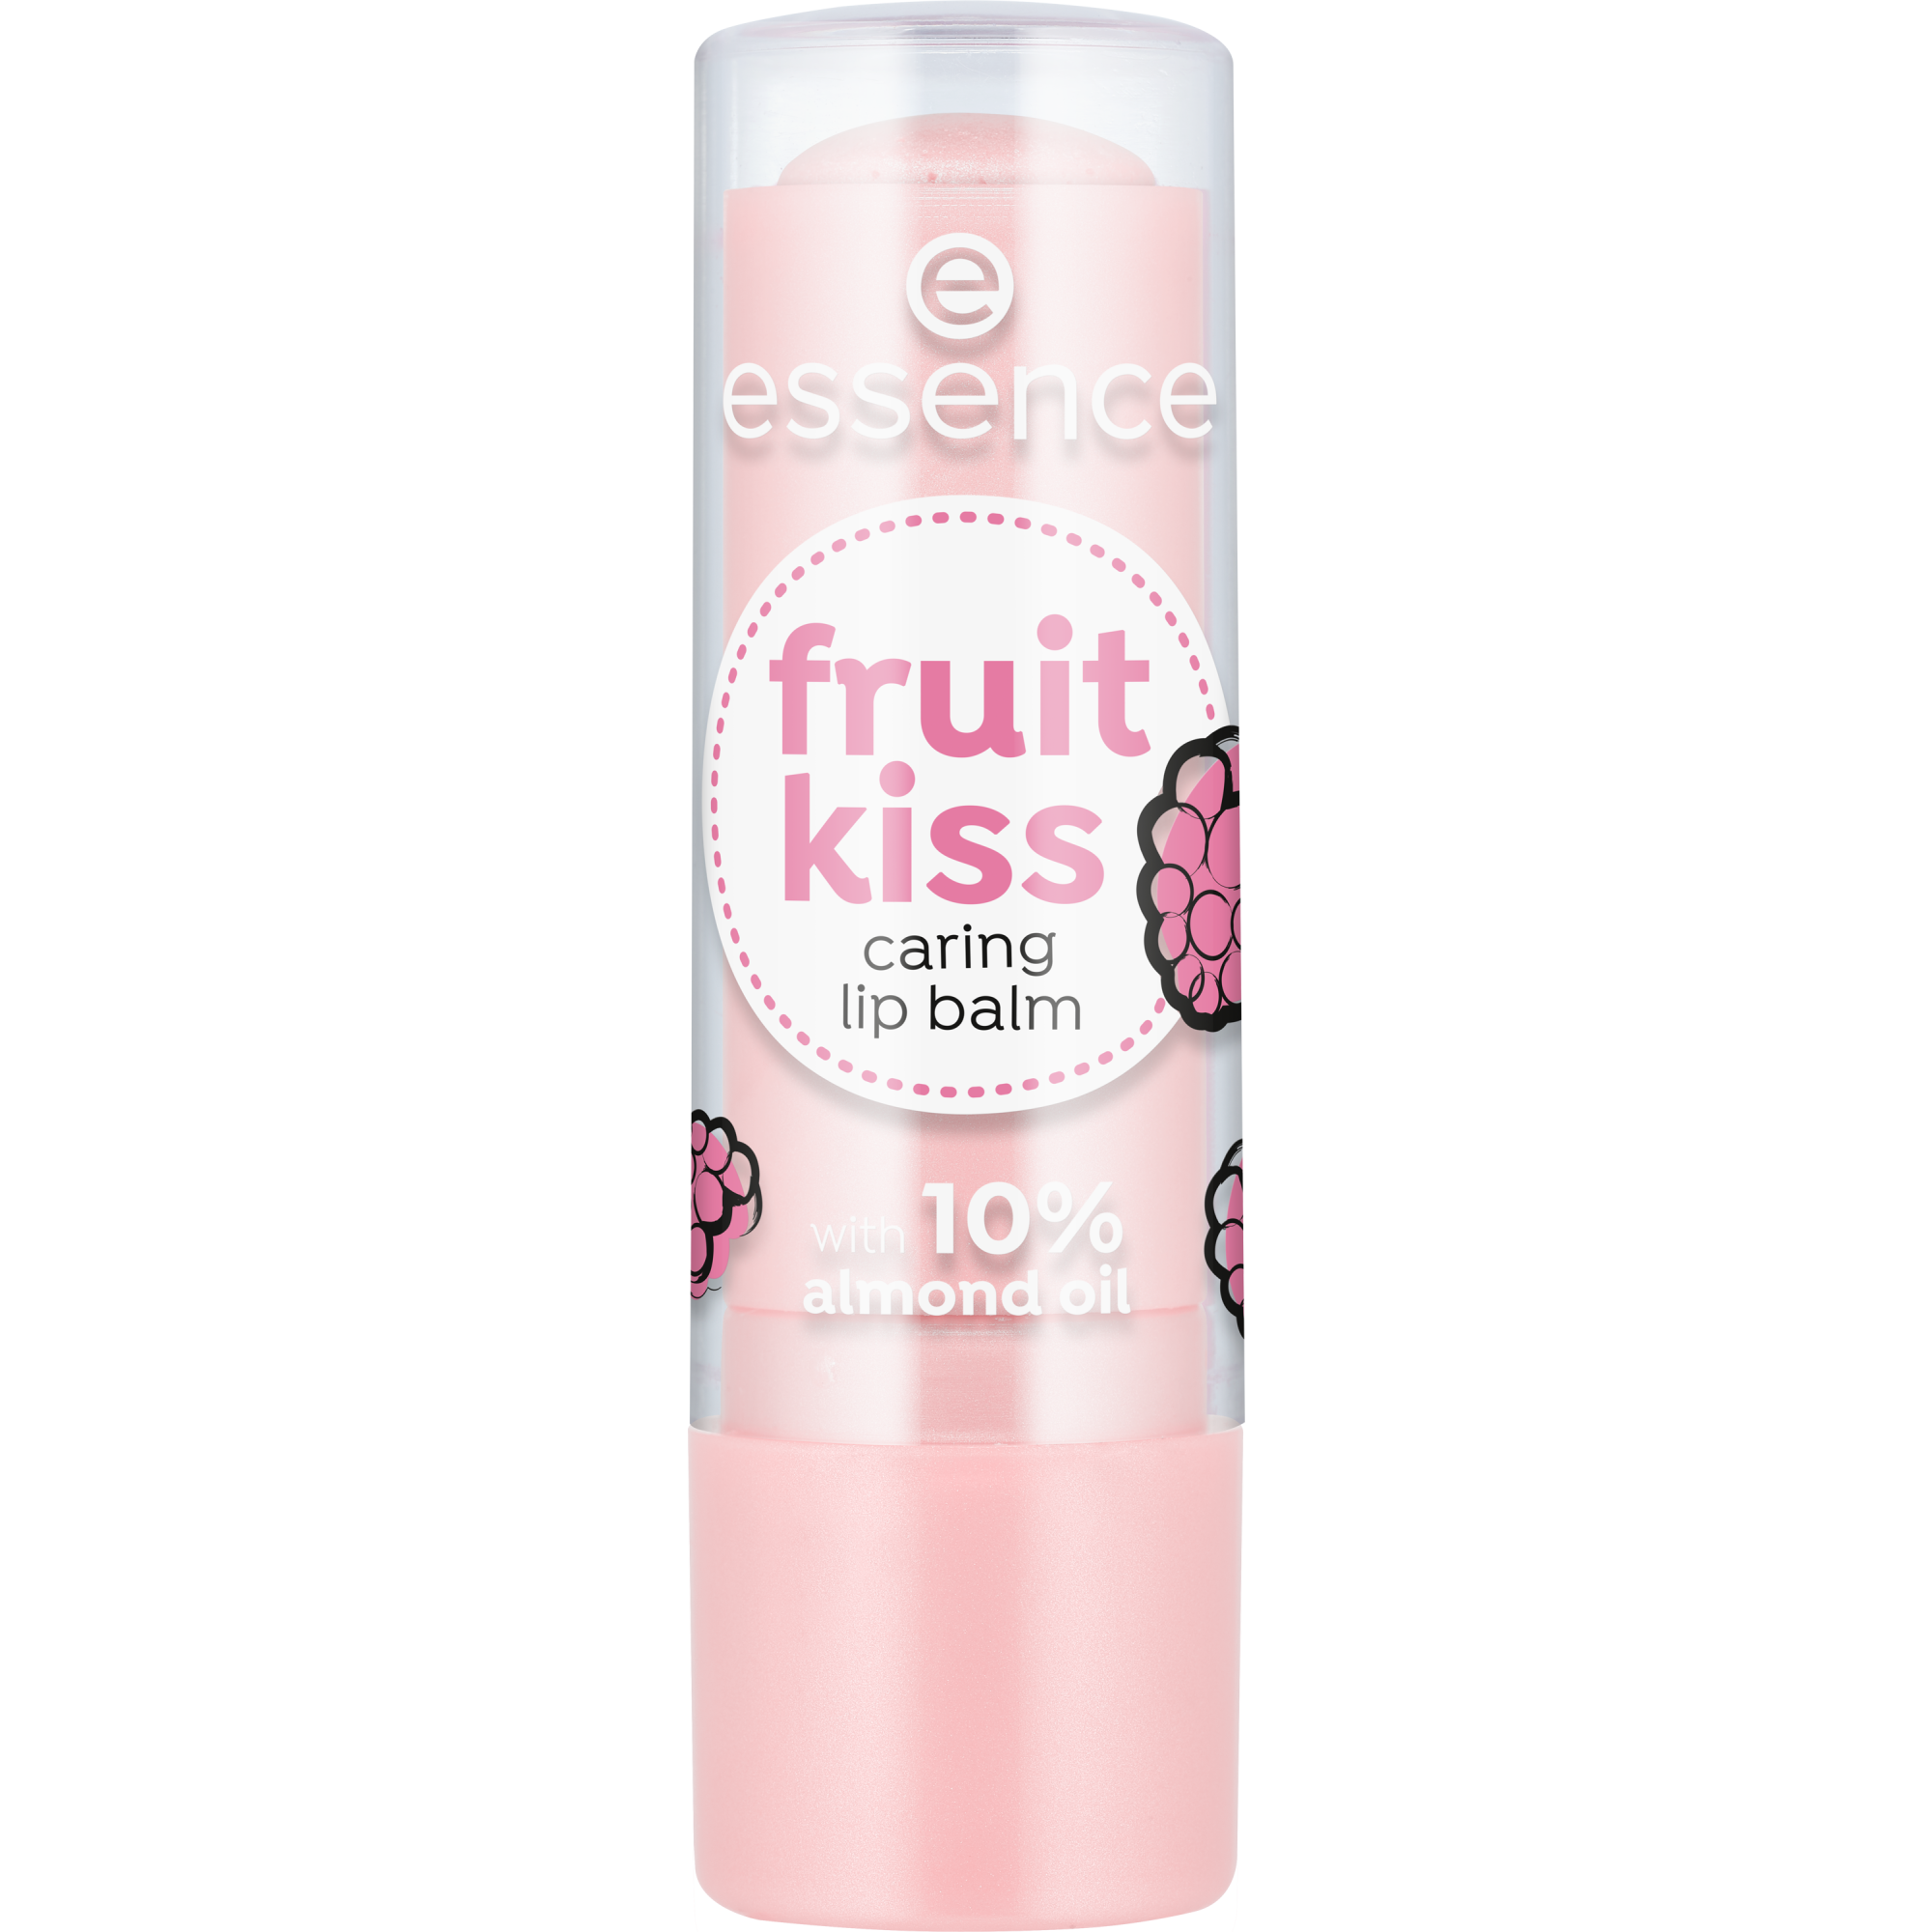 fruit kiss caring lip balm